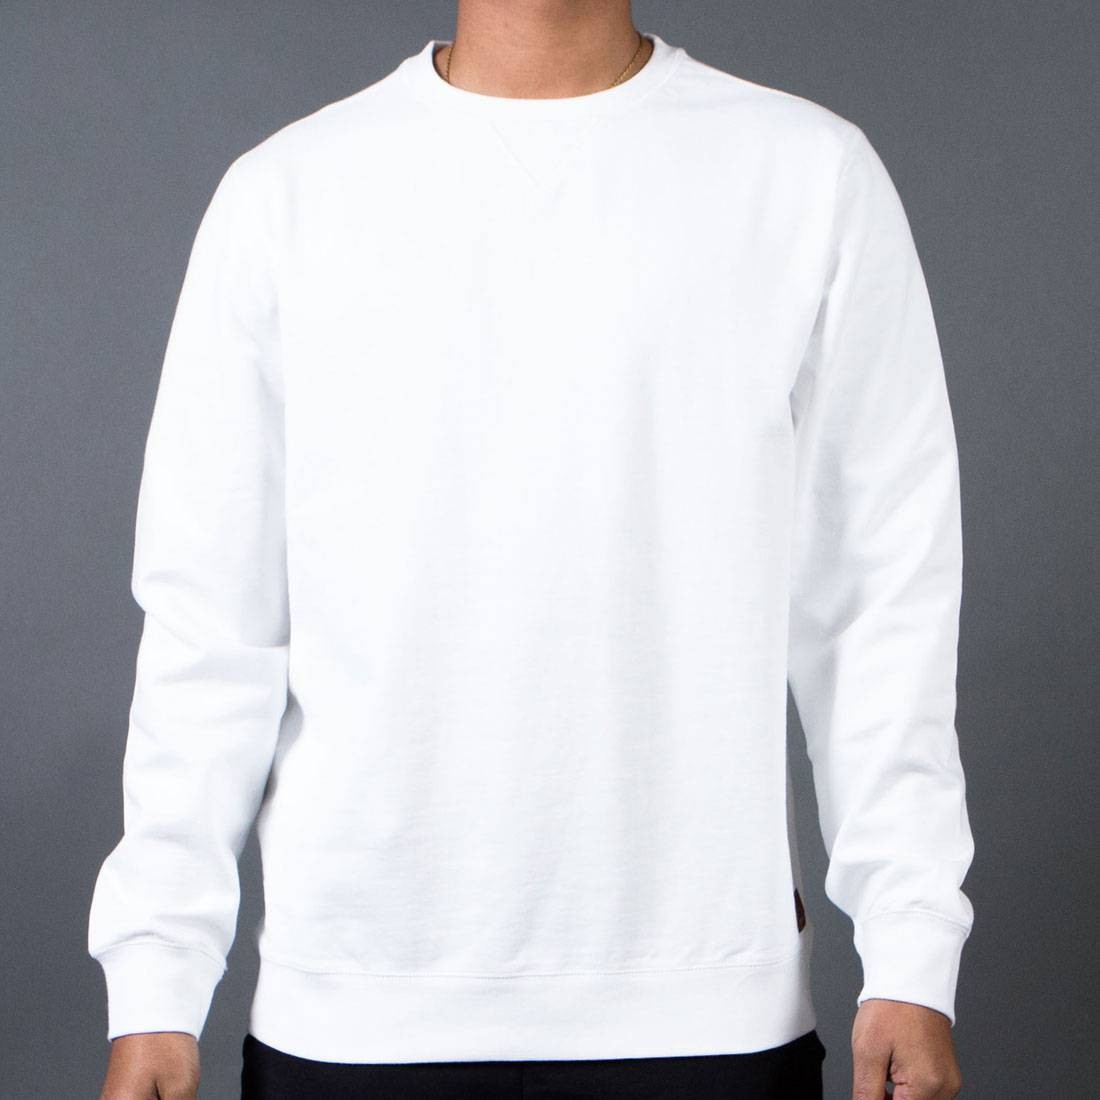 vans sweater white